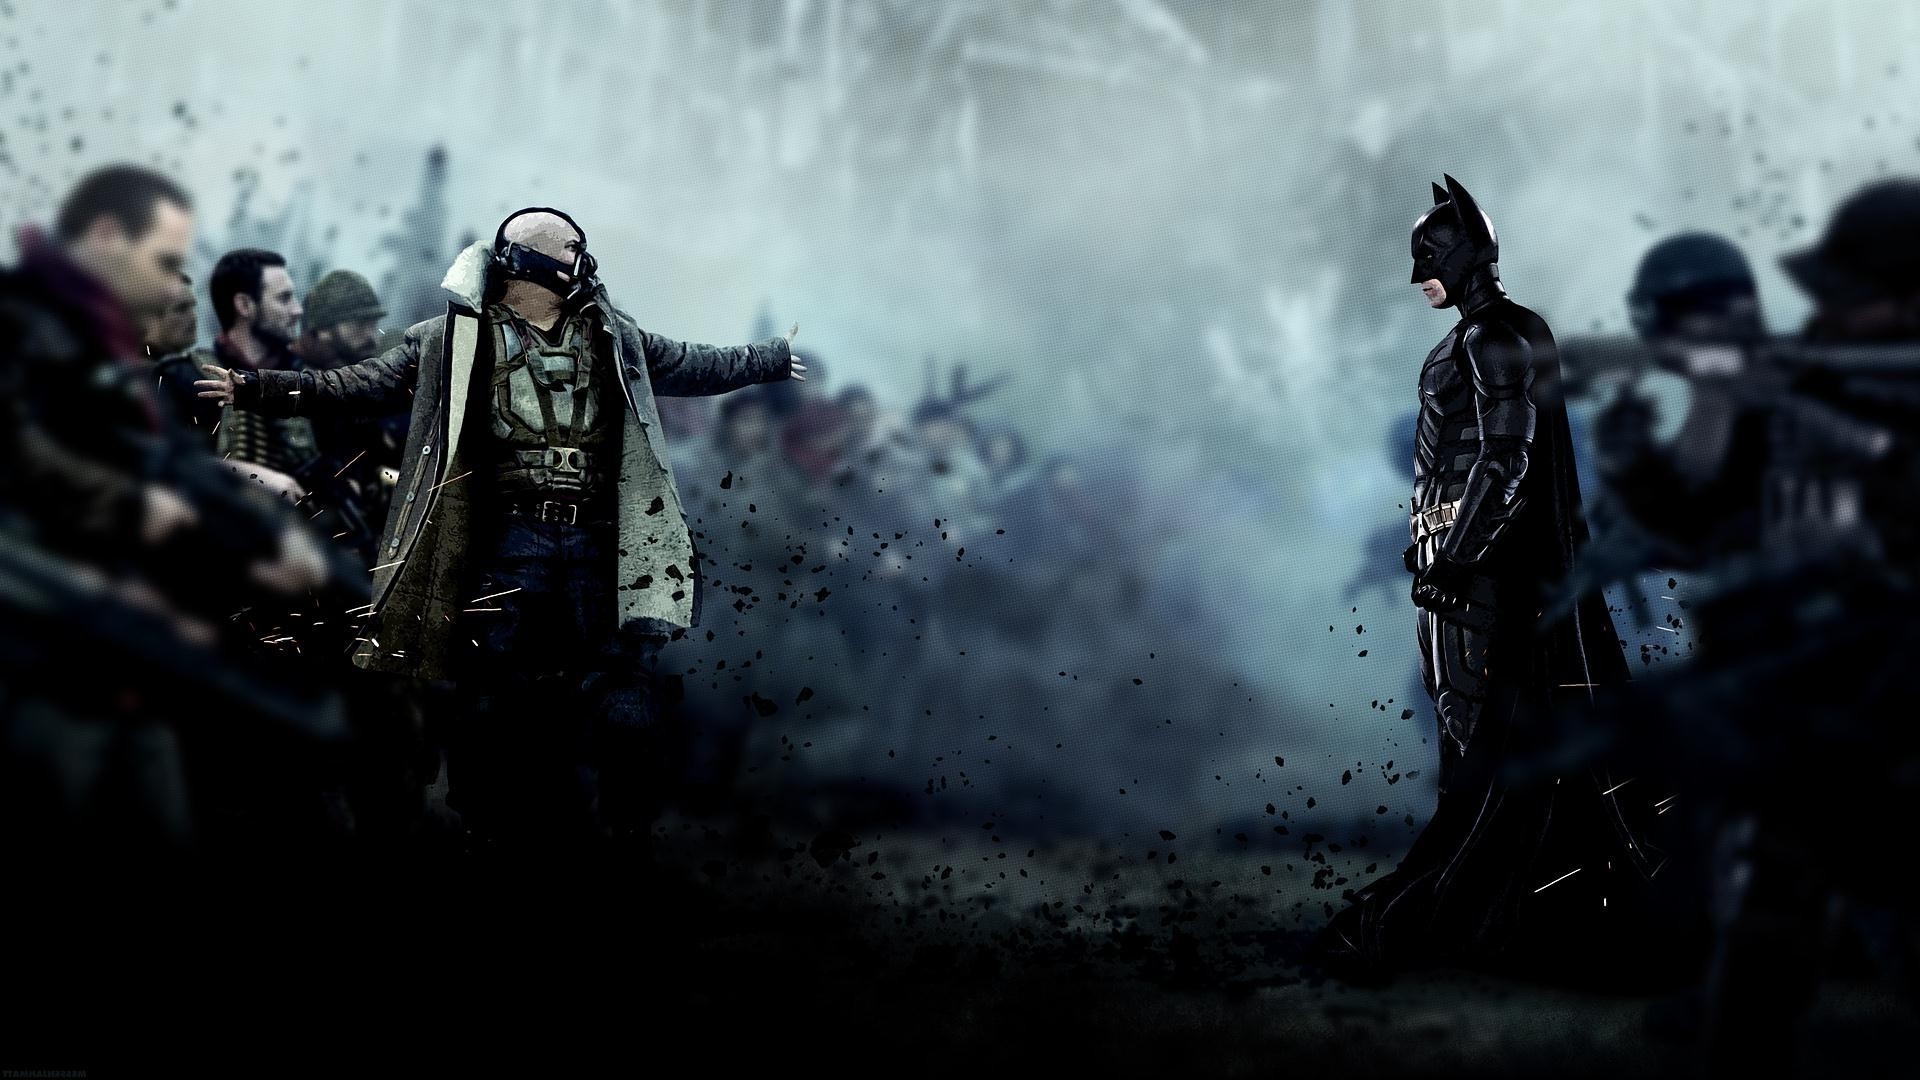 Batman and Bane   The Dark Knight Rises wallpaper 4097